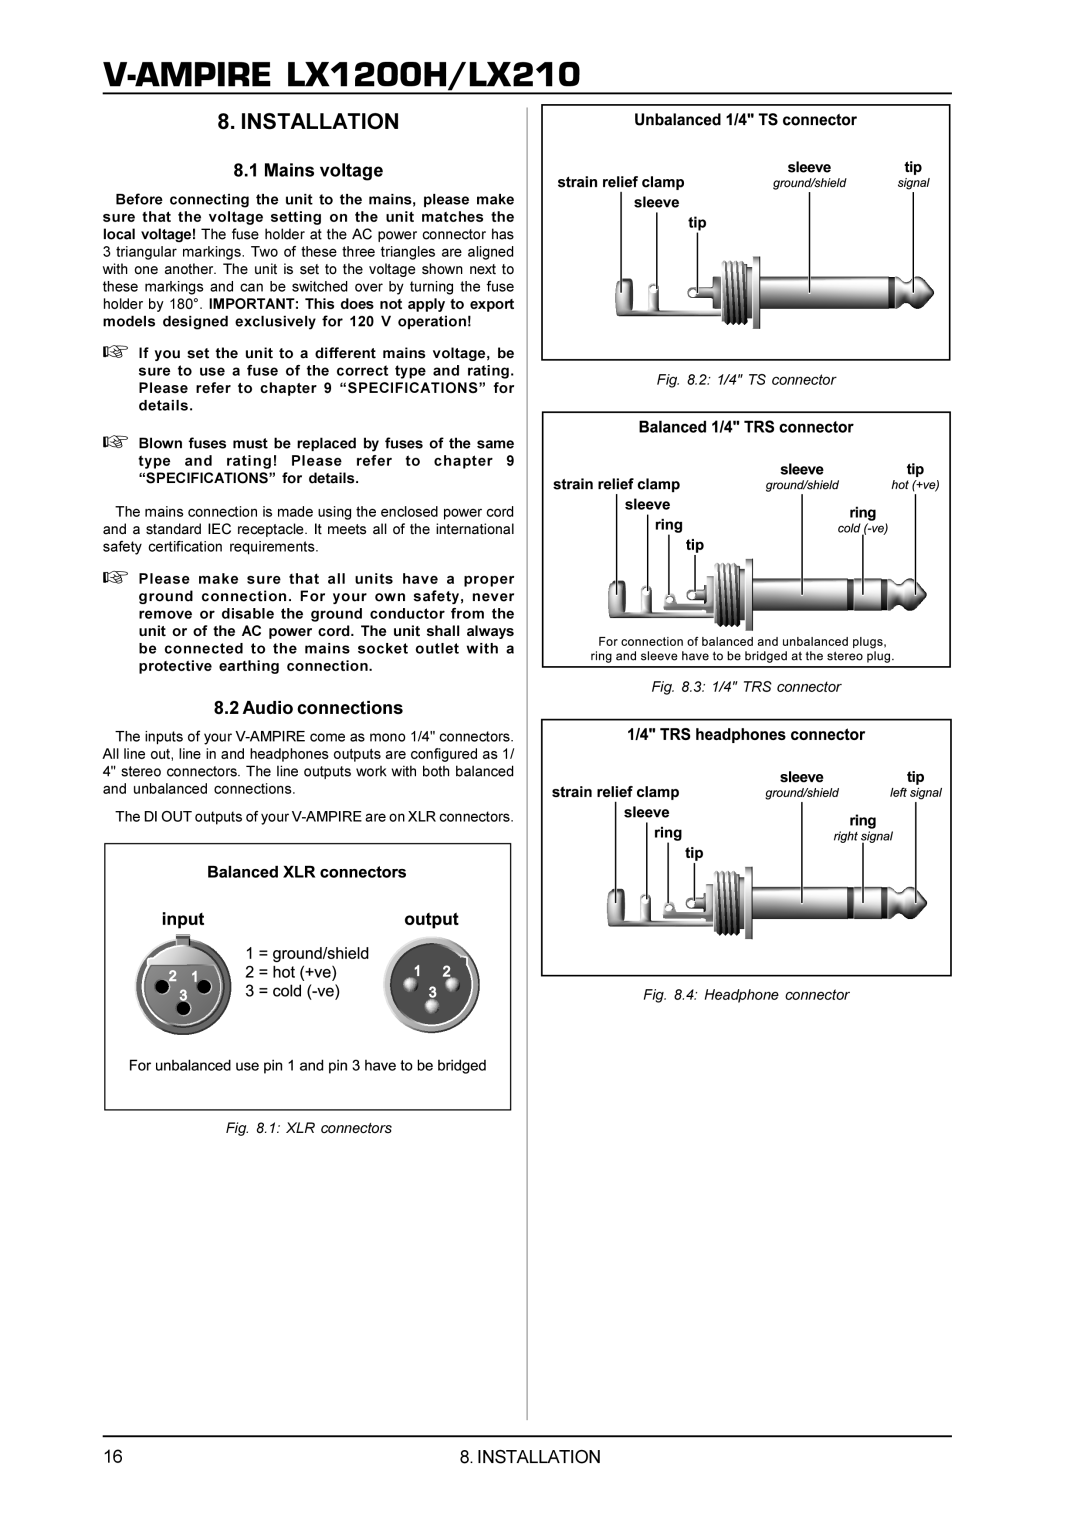 Behringer manual Installation, 8.1Mains voltage, Audio connections, V-AMPIRELX1200H/LX210, 1 XLR connectors 